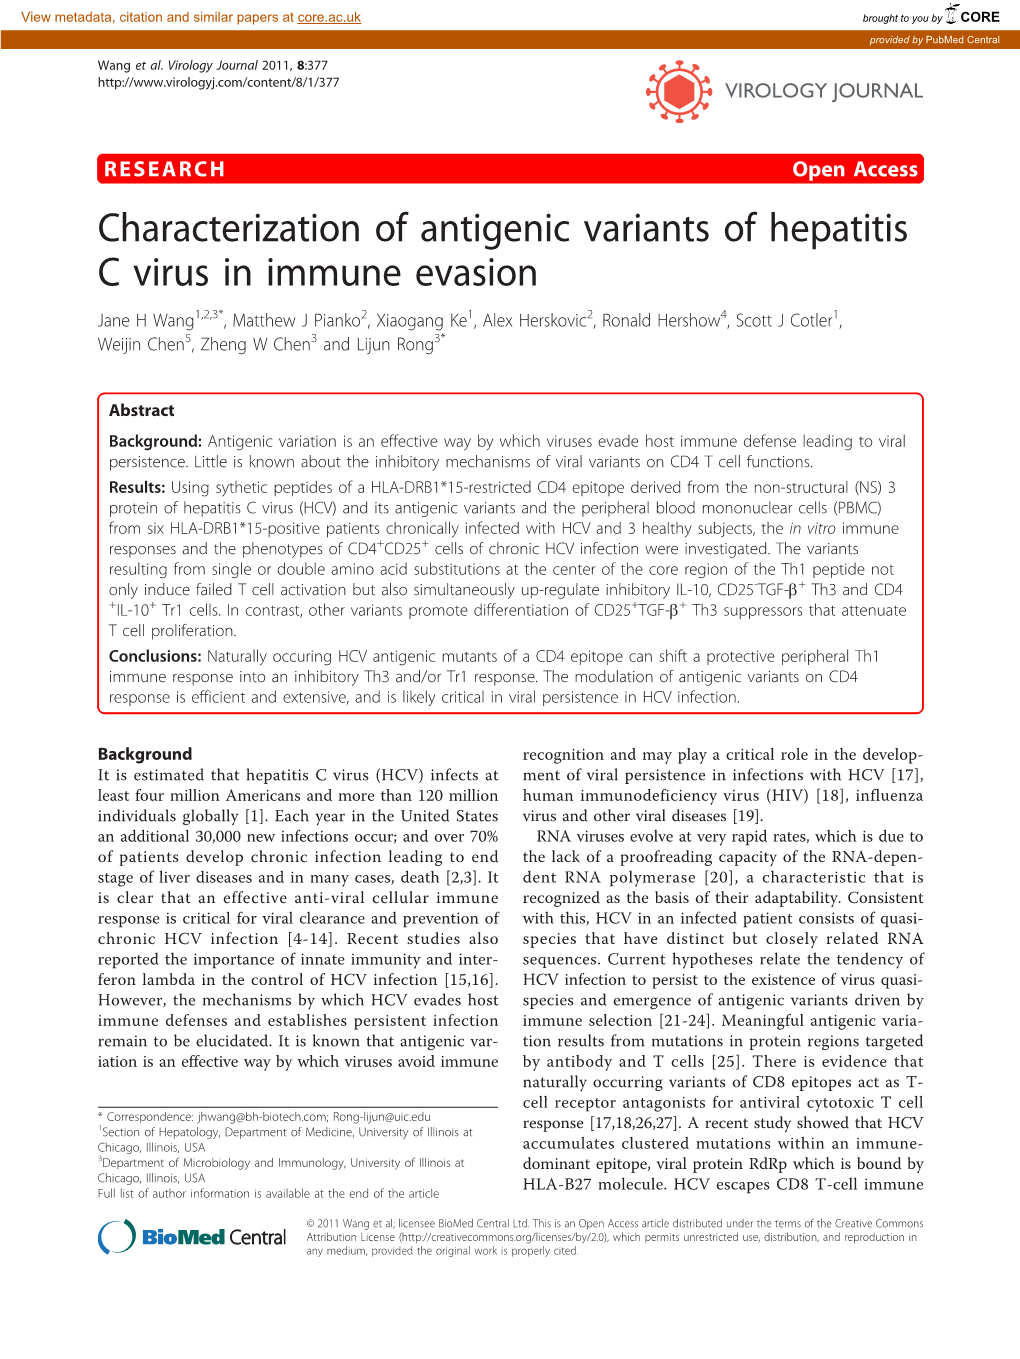 Characterization of Antigenic Variants of Hepatitis C Virus In